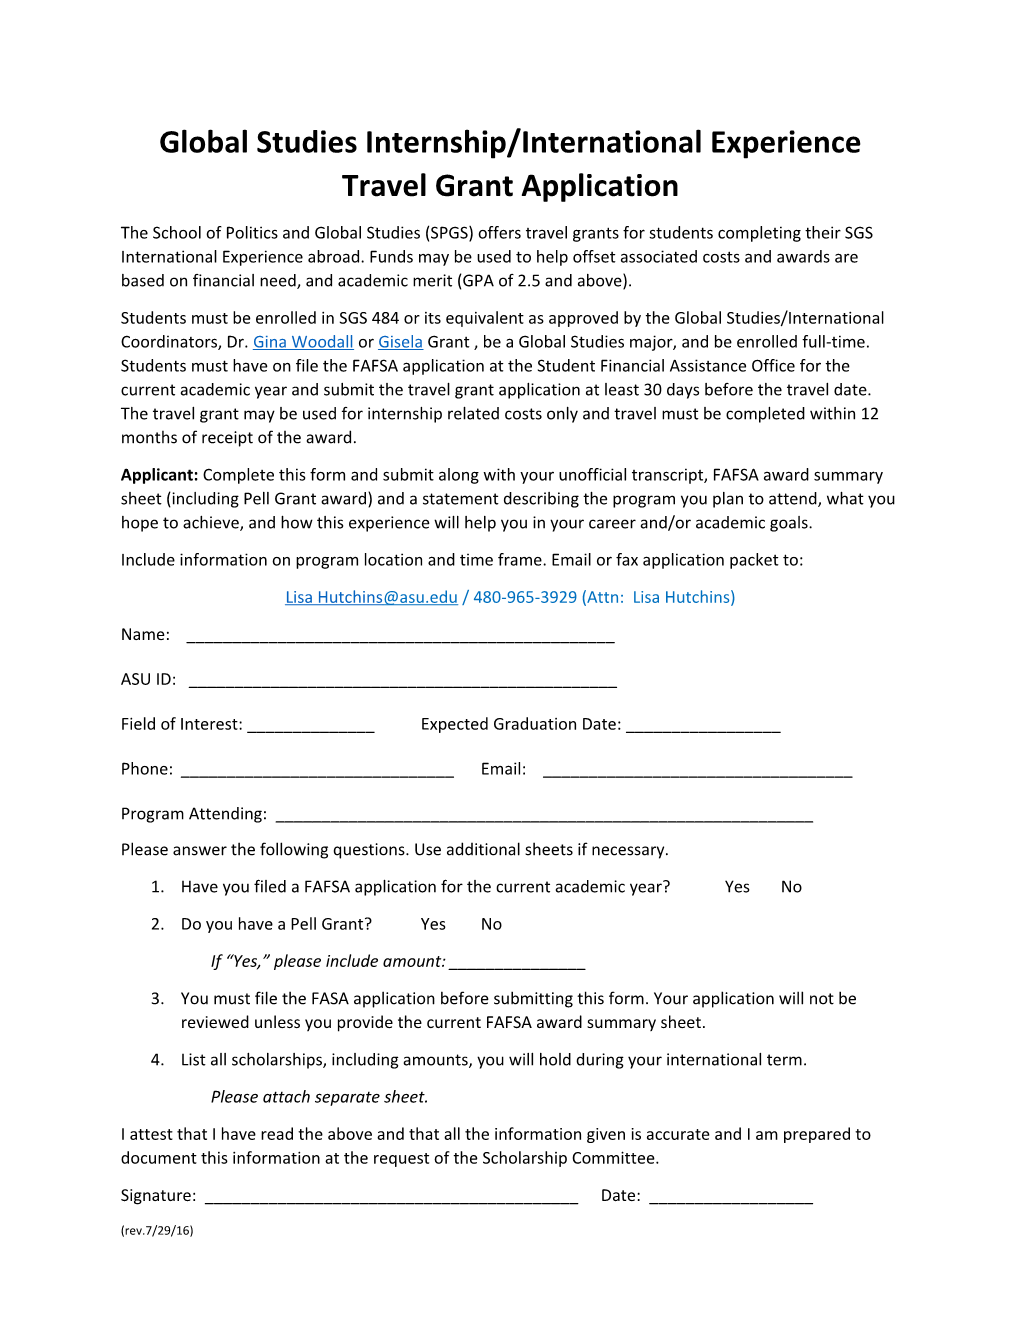 Global Studies Internship/International Experience Travel Grant Application